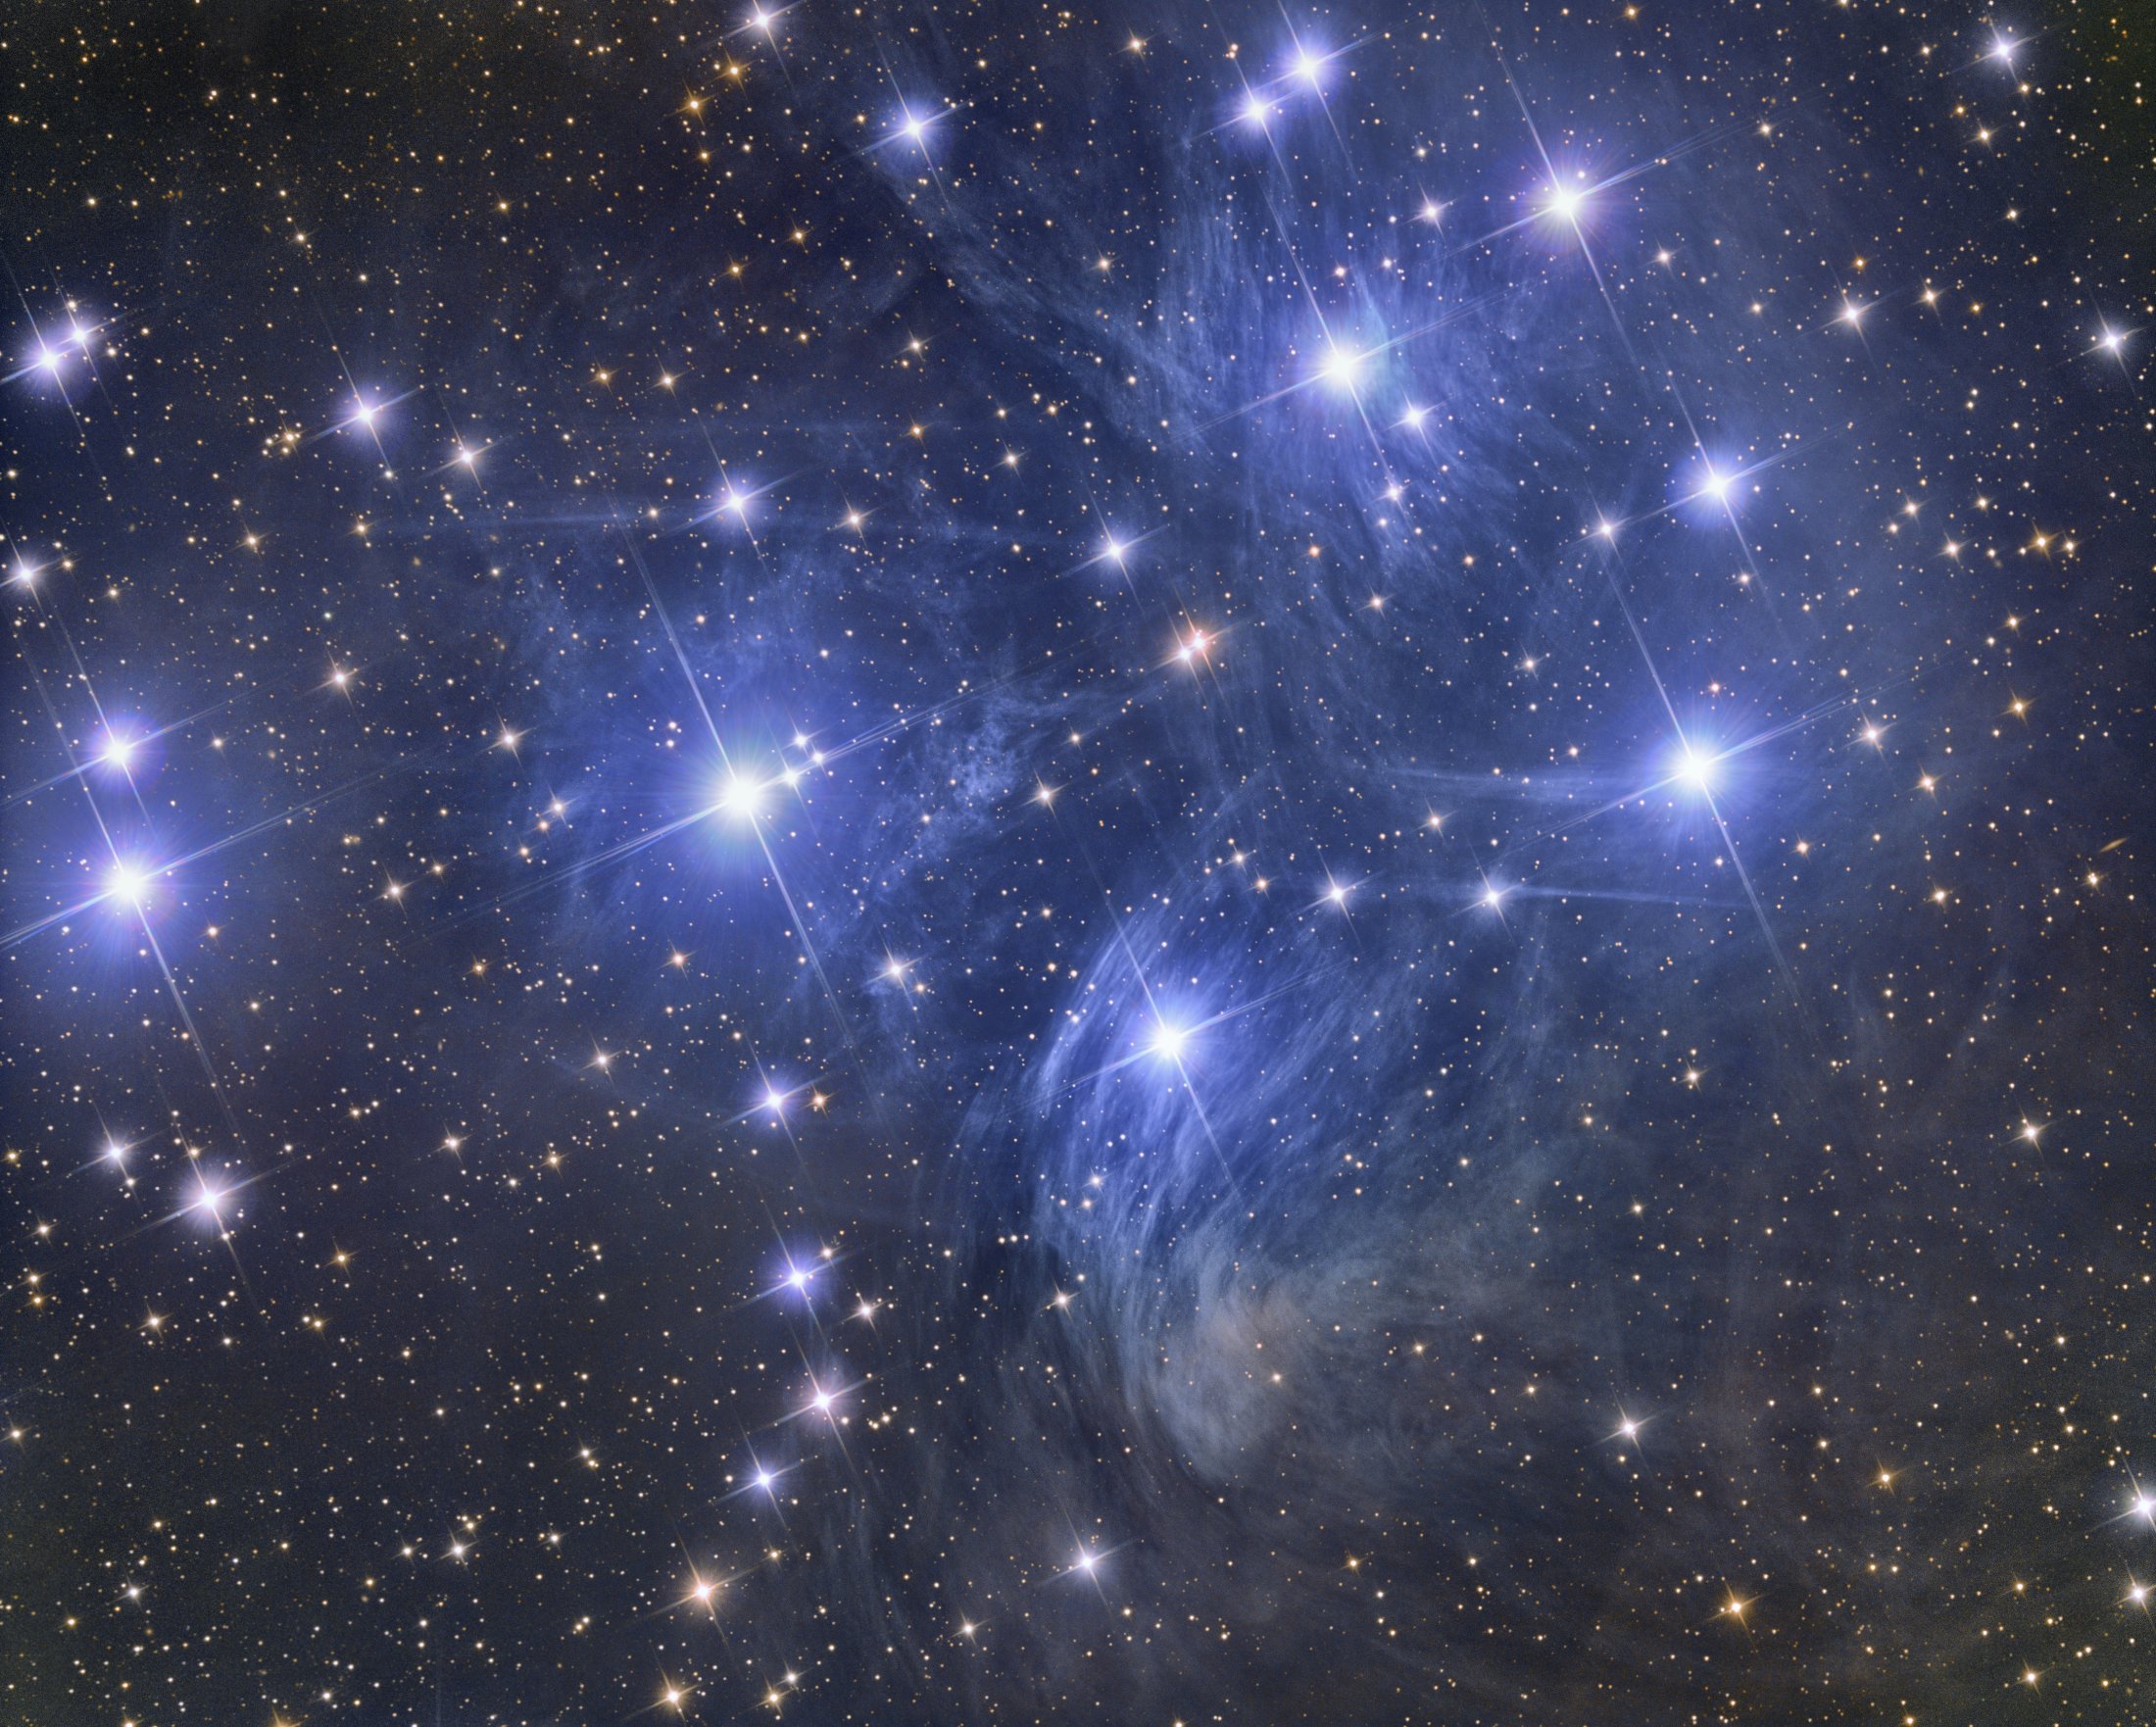 M45 Pleiades Star Cluster